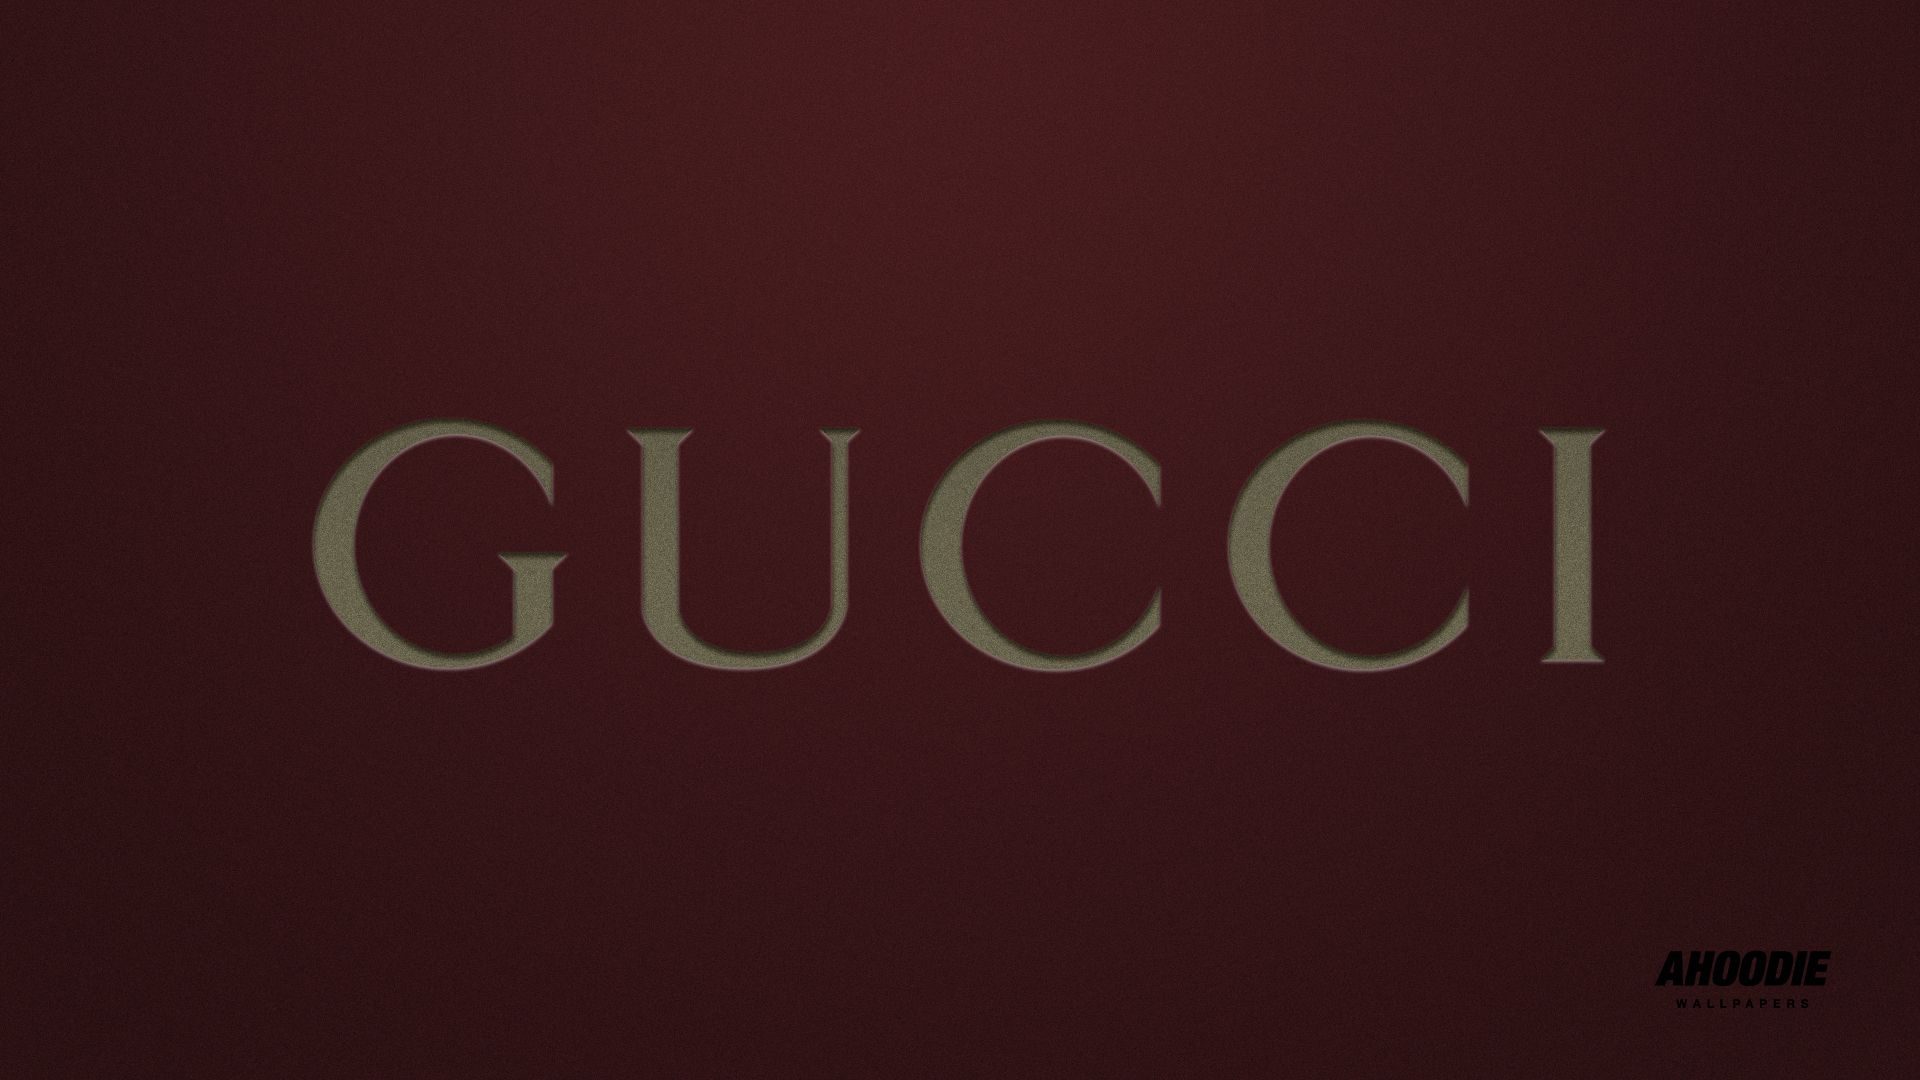 Gucci логотип